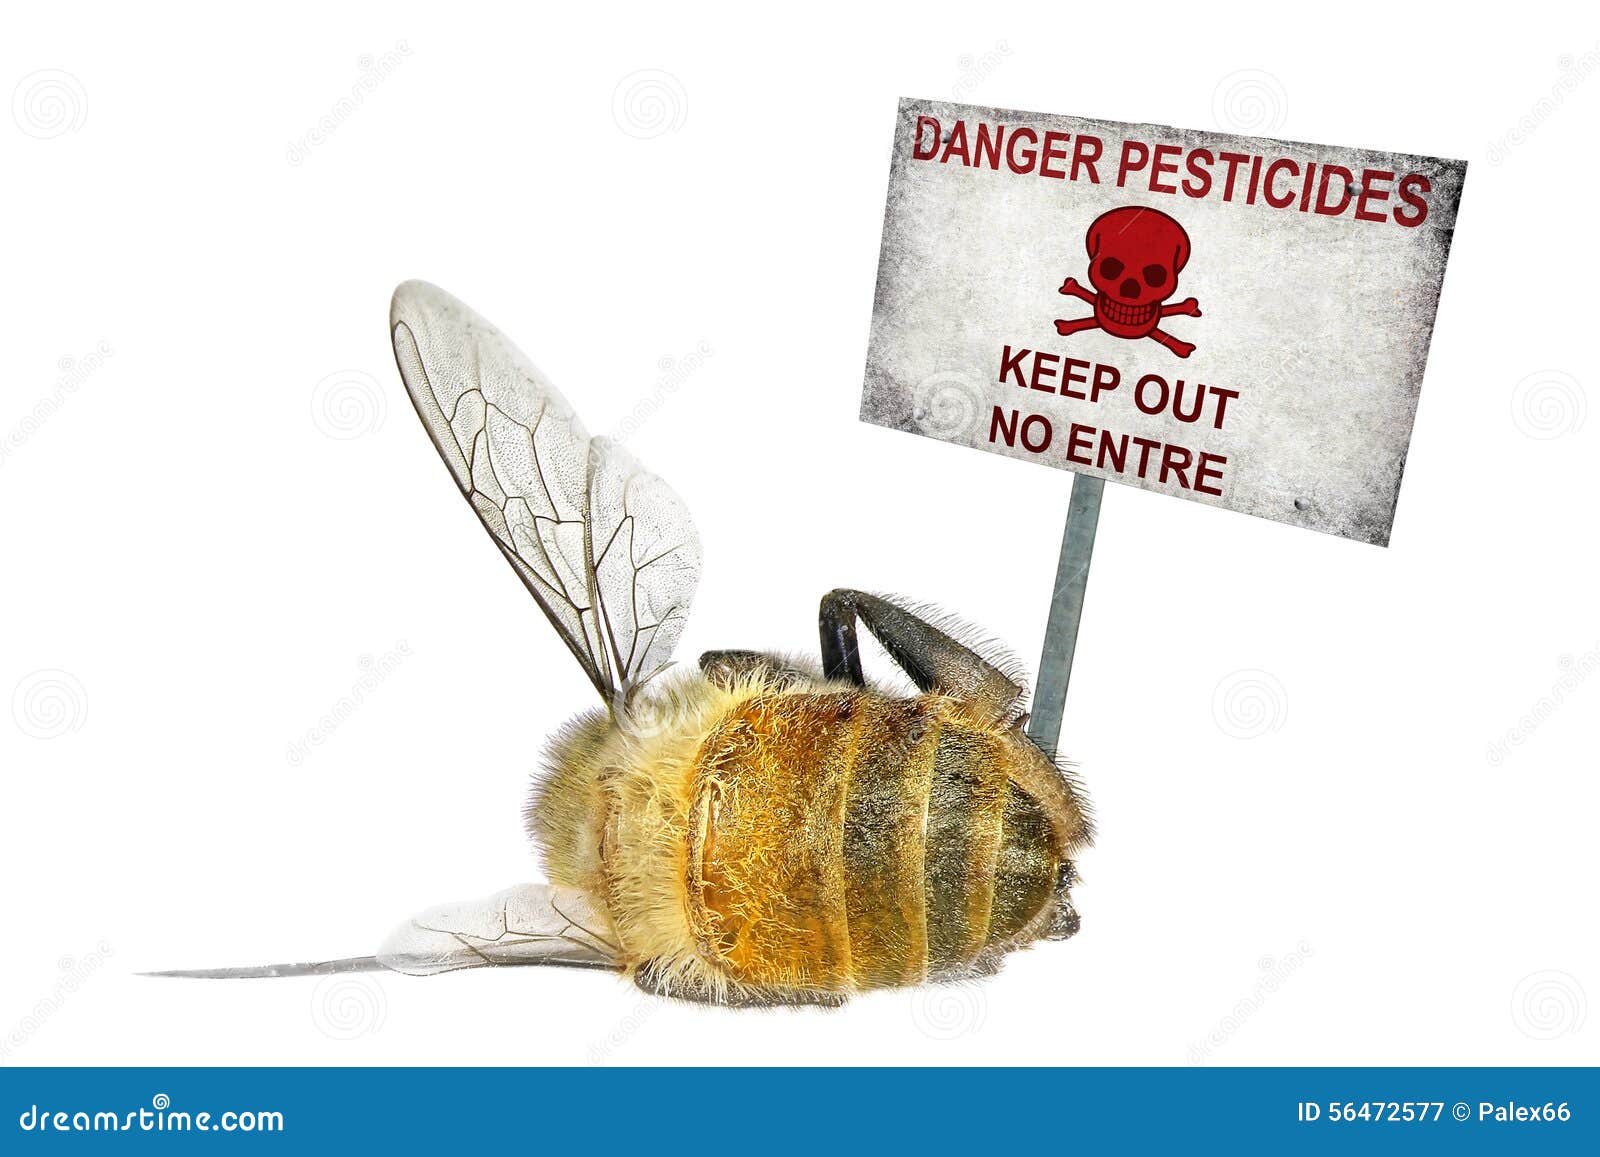 danger pesticides